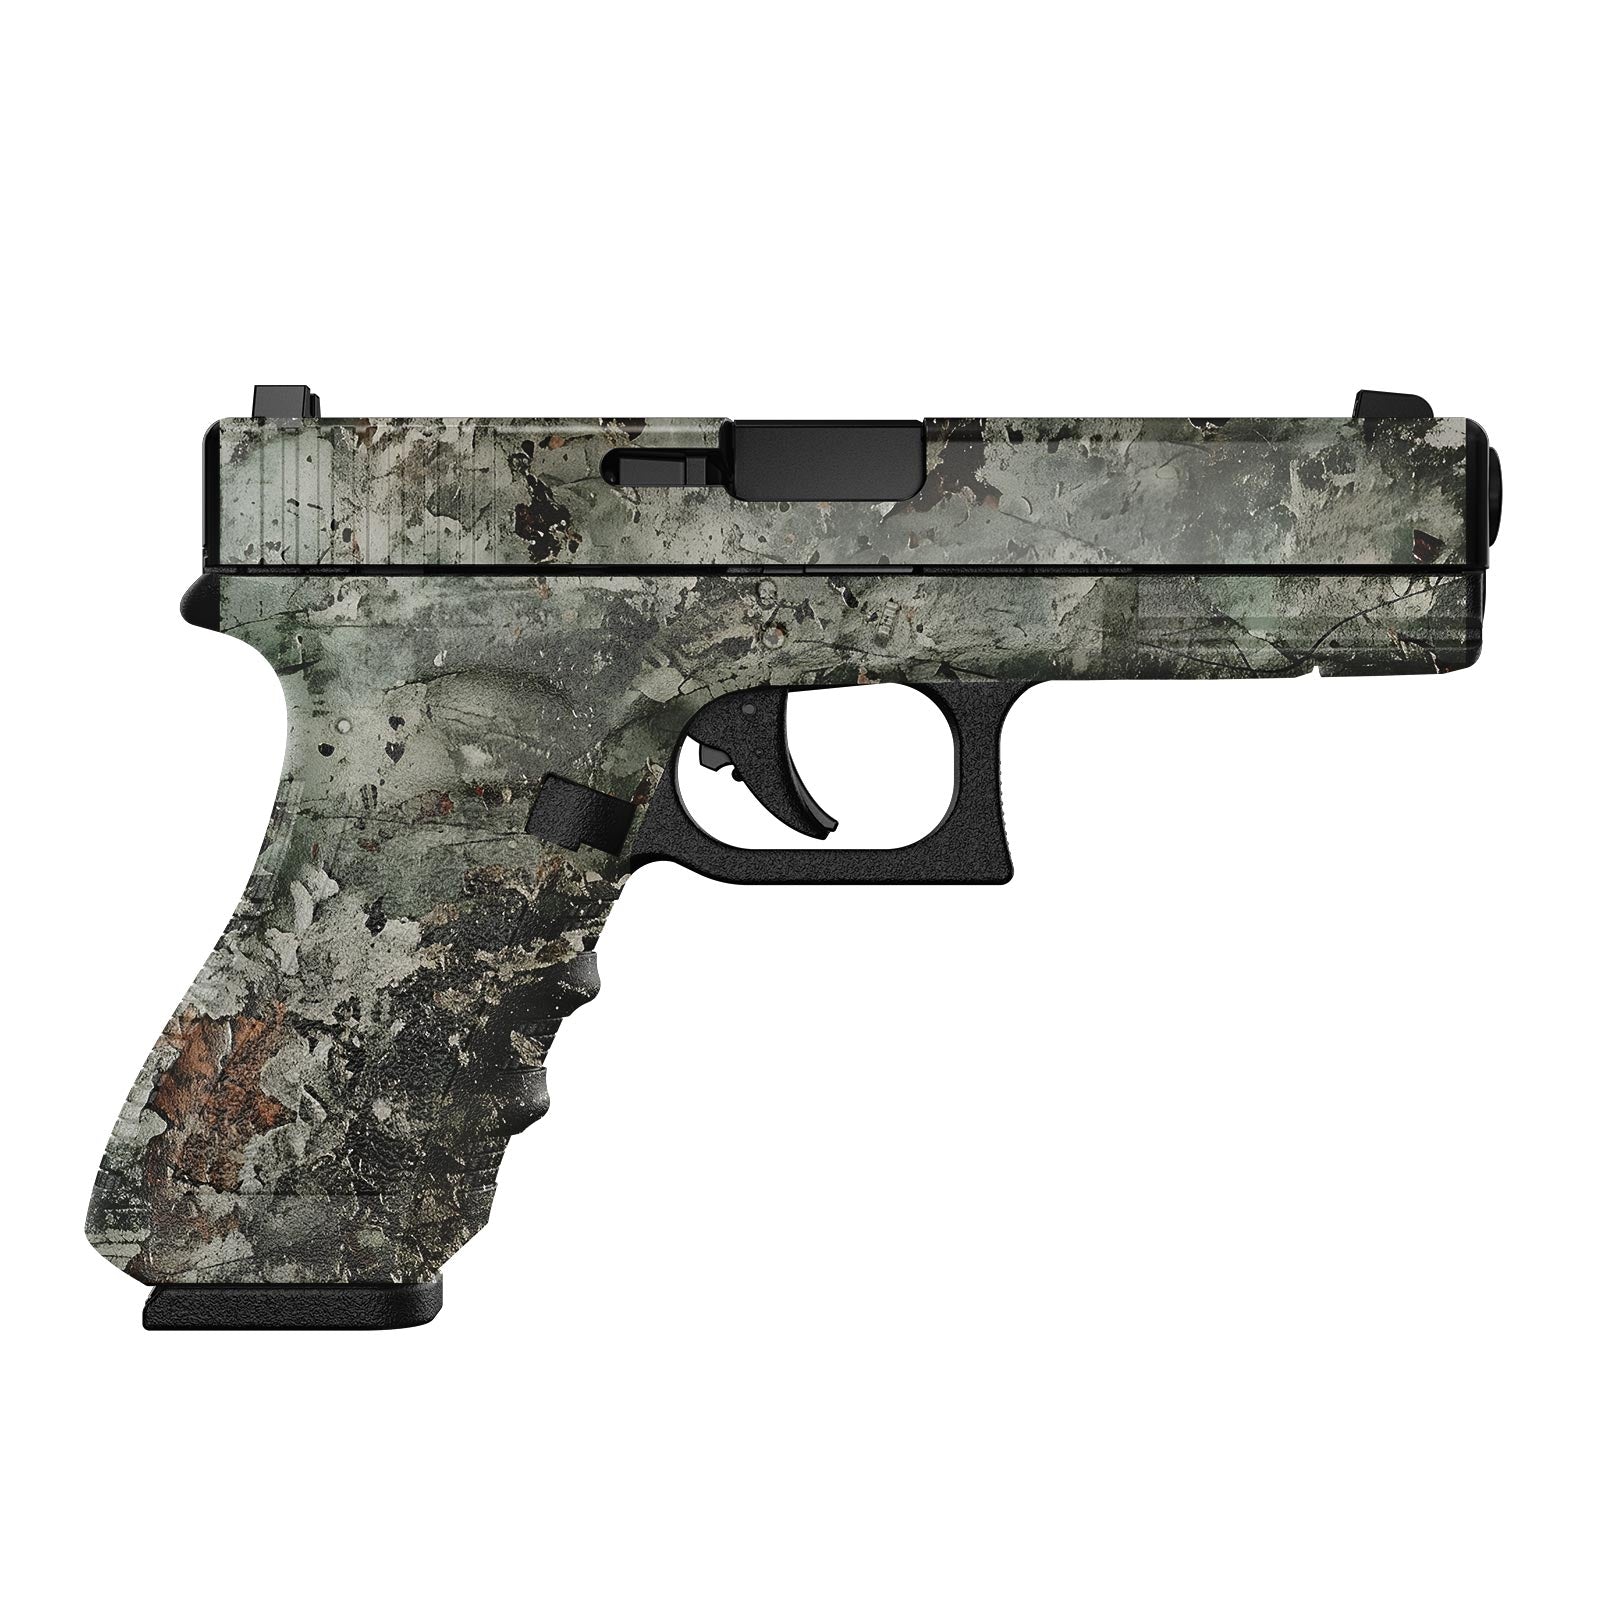 Universal Gun Skin - Camouflage